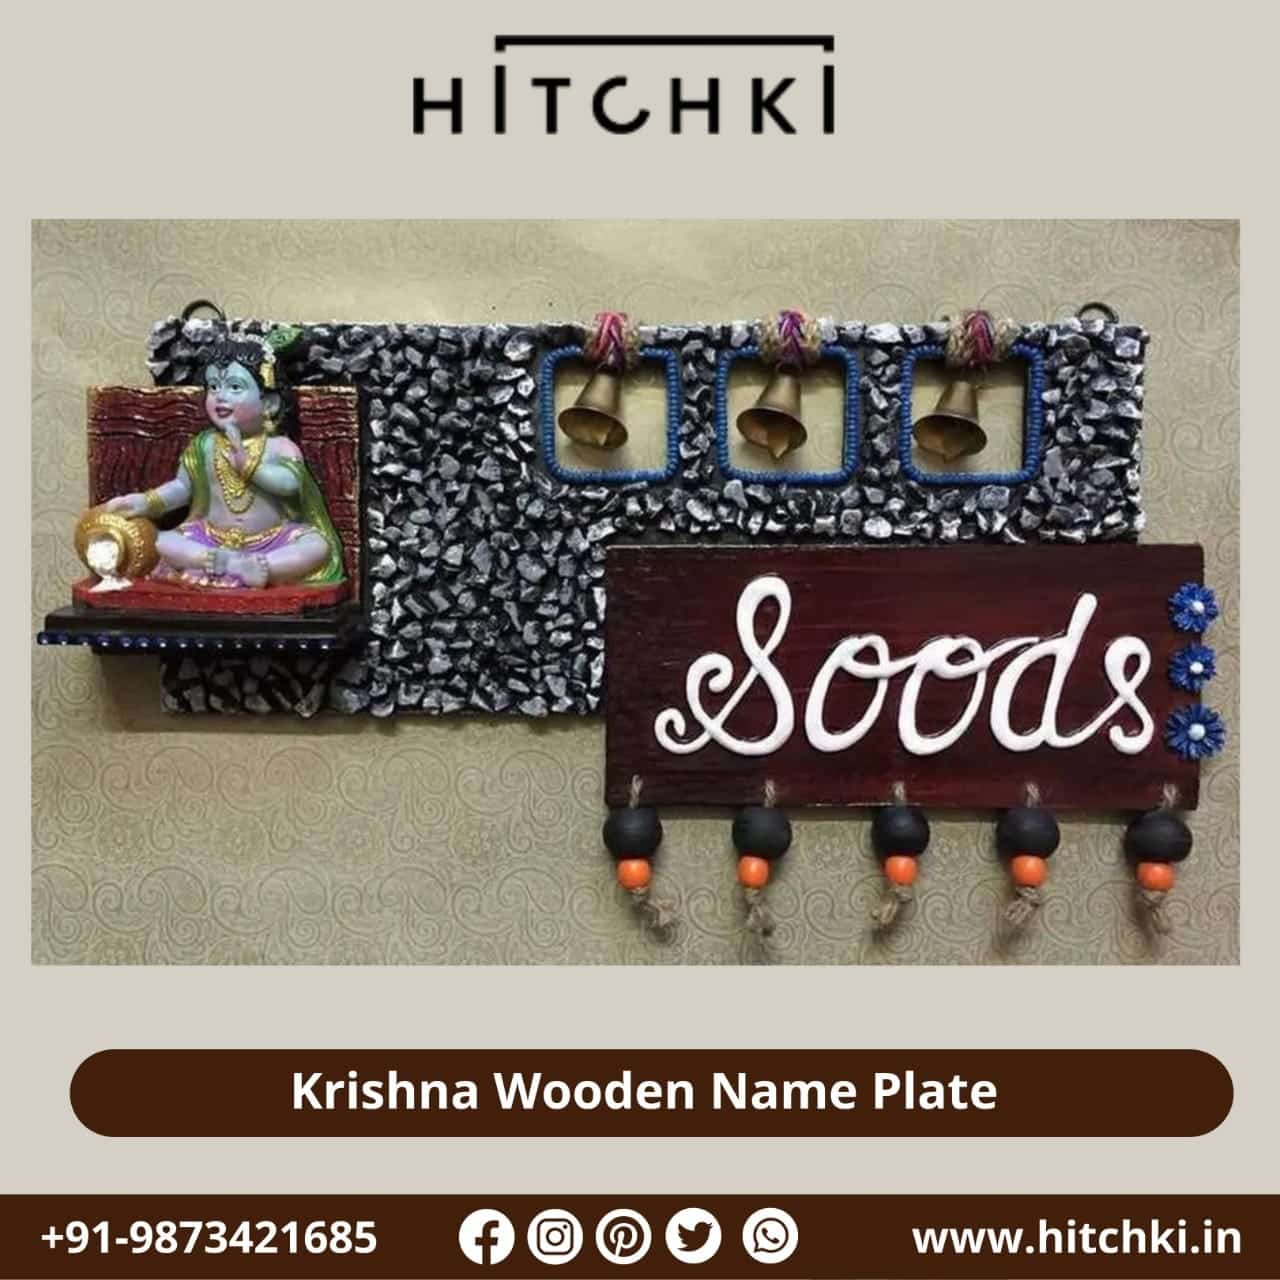 New Krishna Wooden Name Plate From Hitchki